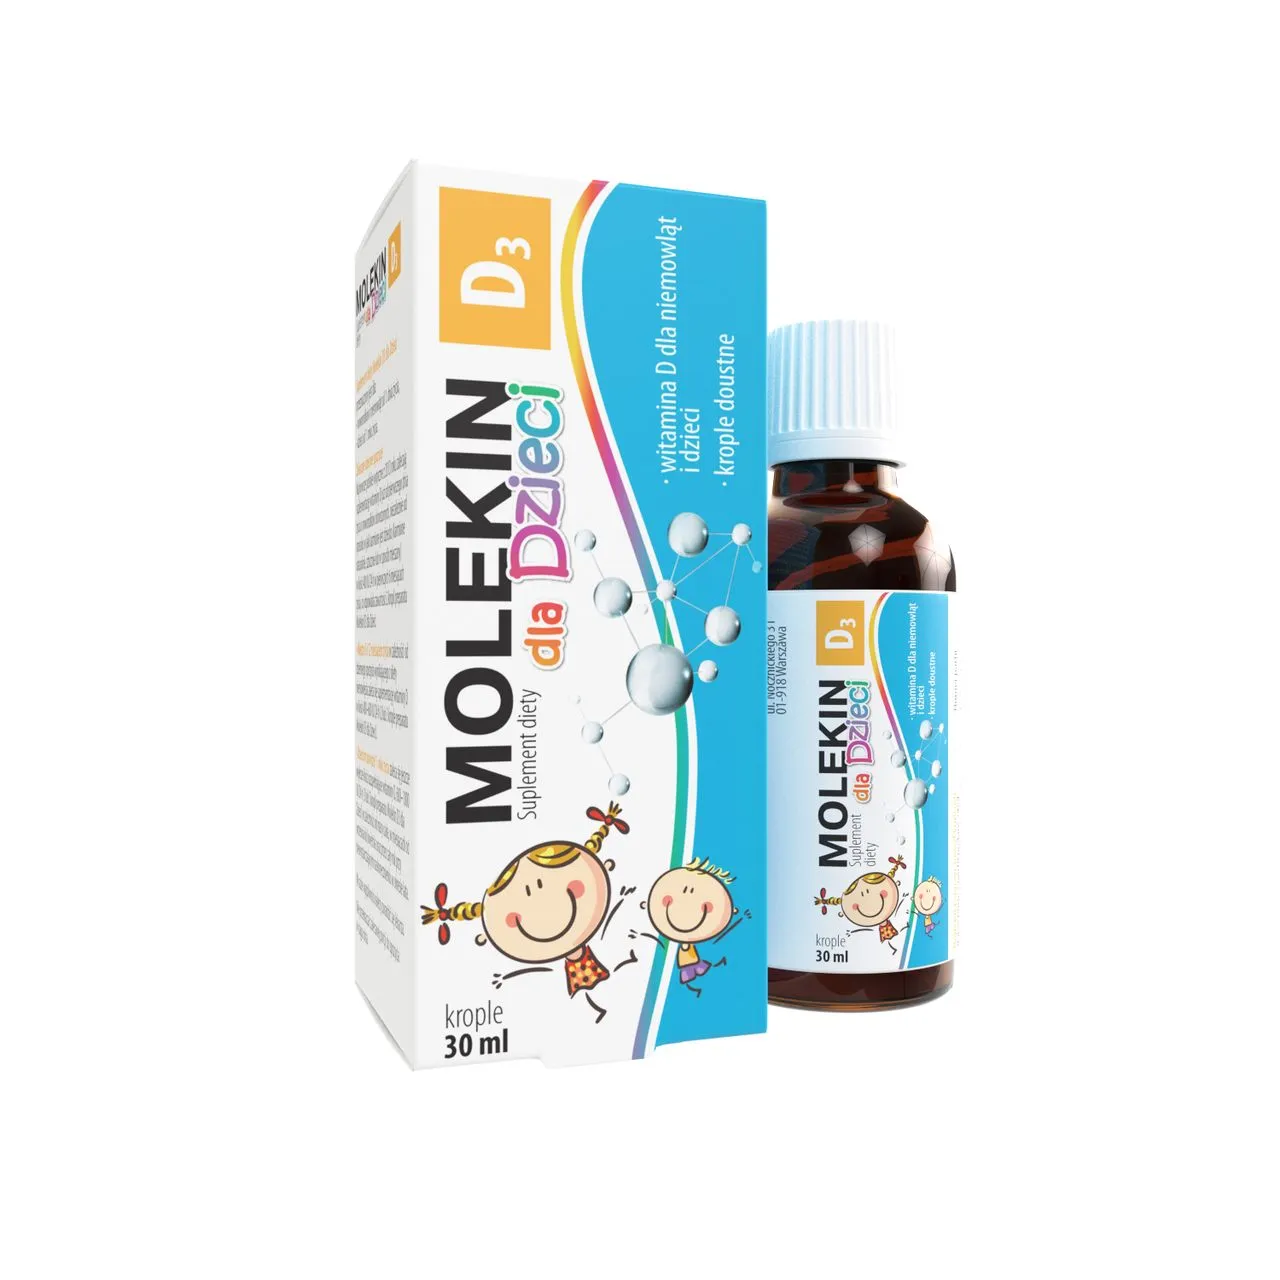 Molekin D3 dla Dzieci, suplement diety, krople doustne, 30 ml